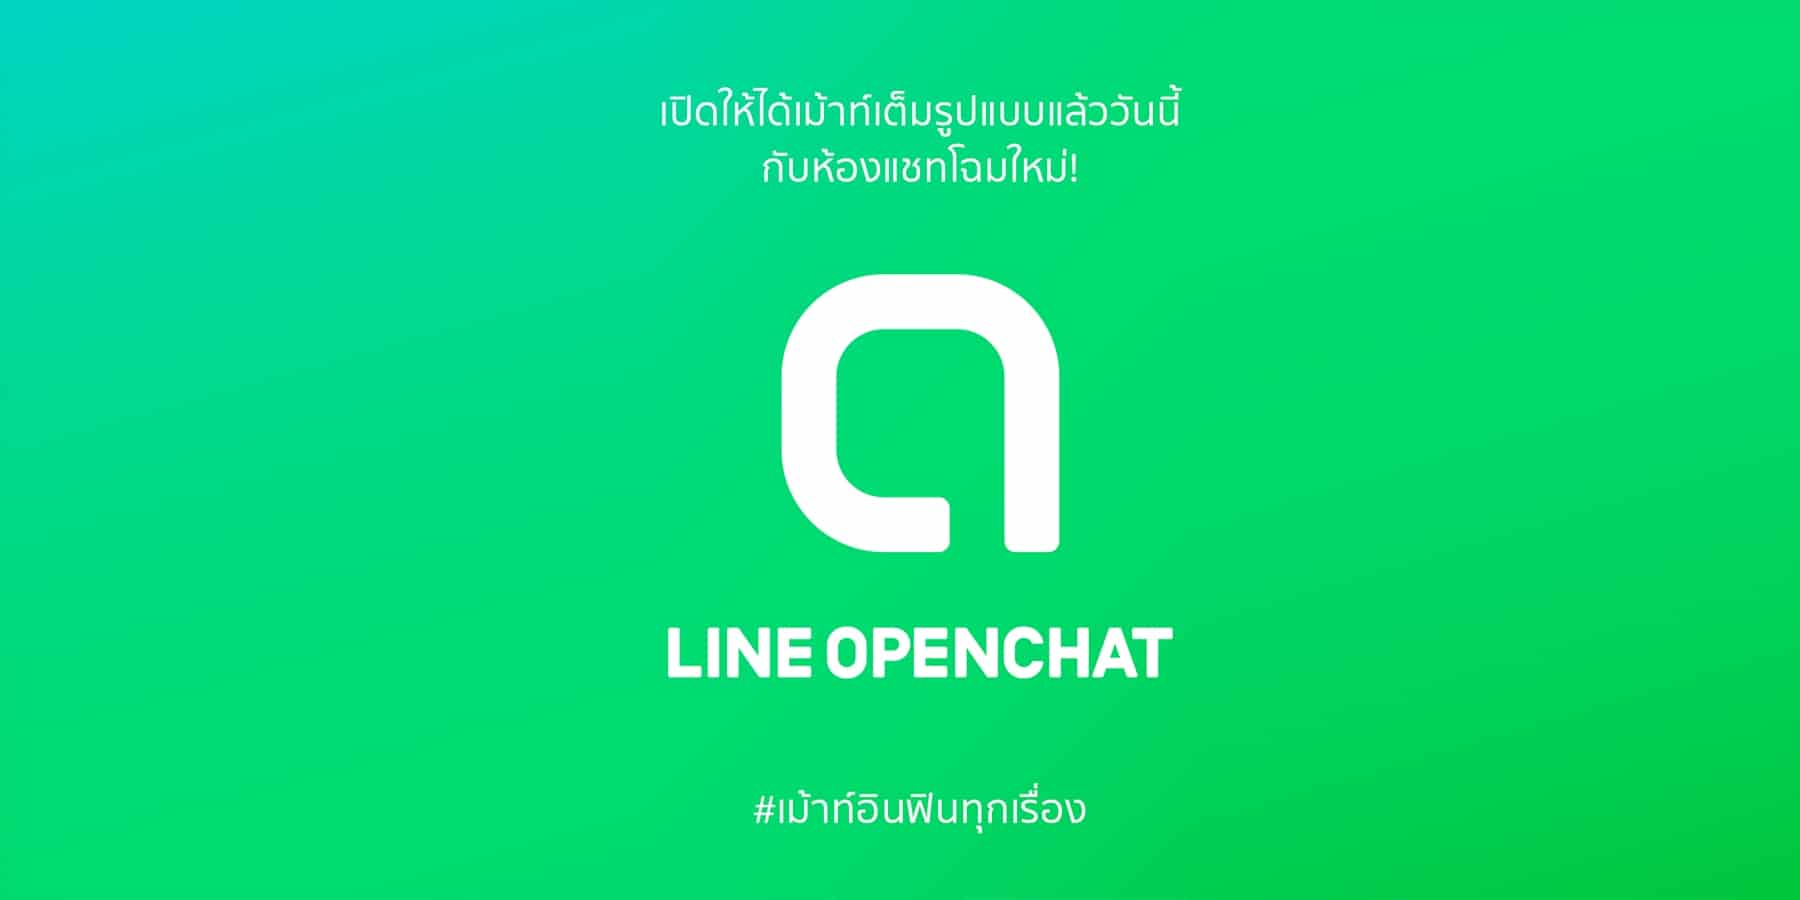 LINE Square ปรับโฉมใหม่เป็น LINE OpenChat มีอะไรเปลี่ยนแปลงบ้าง 1